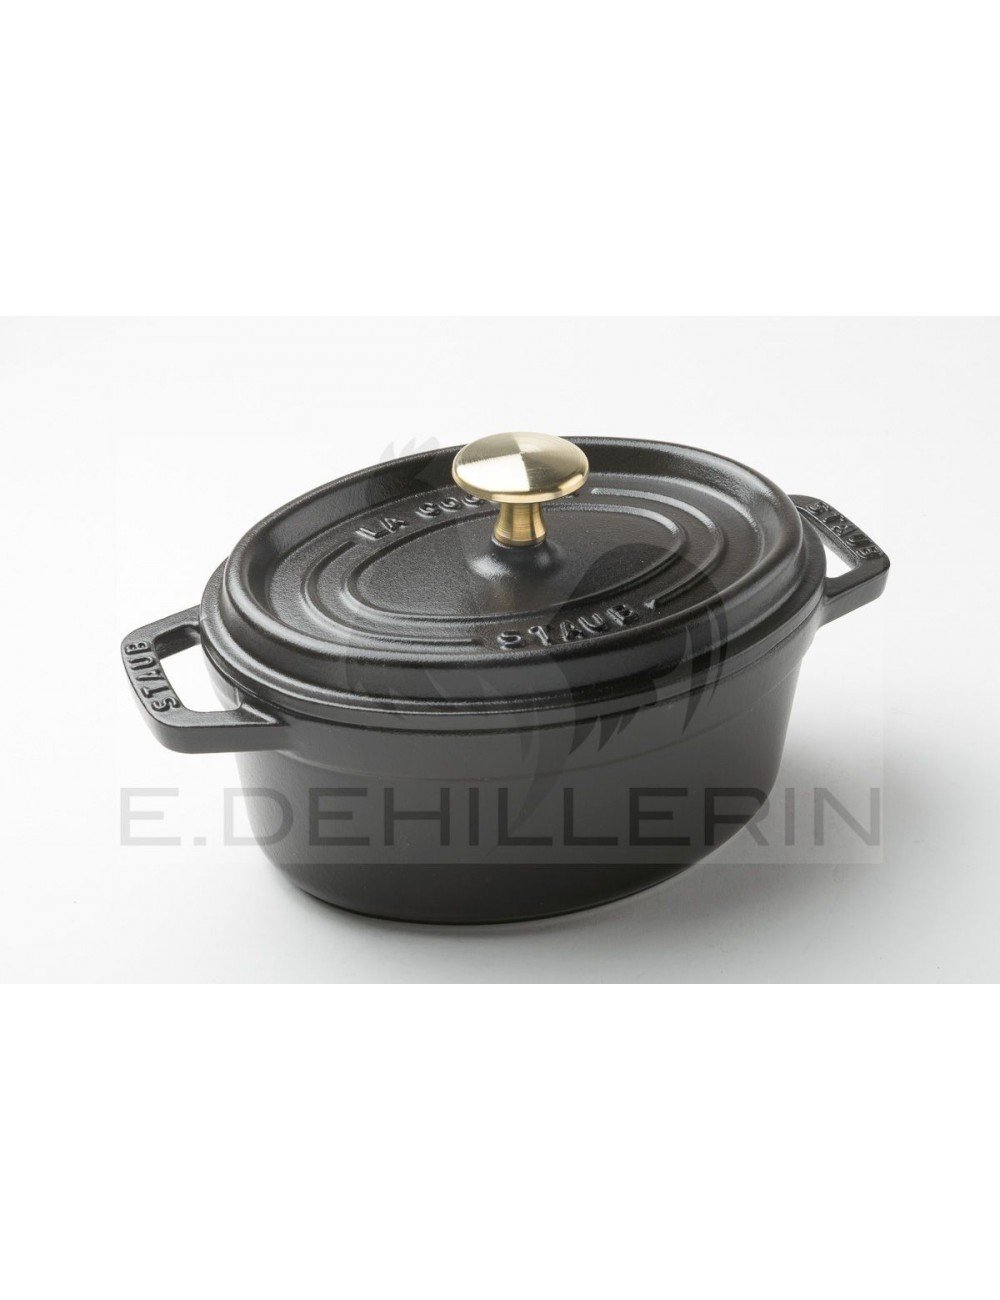 https://www.edehillerin.fr/698-large_default/casserole-cast-iron-oval-black-staub.jpg